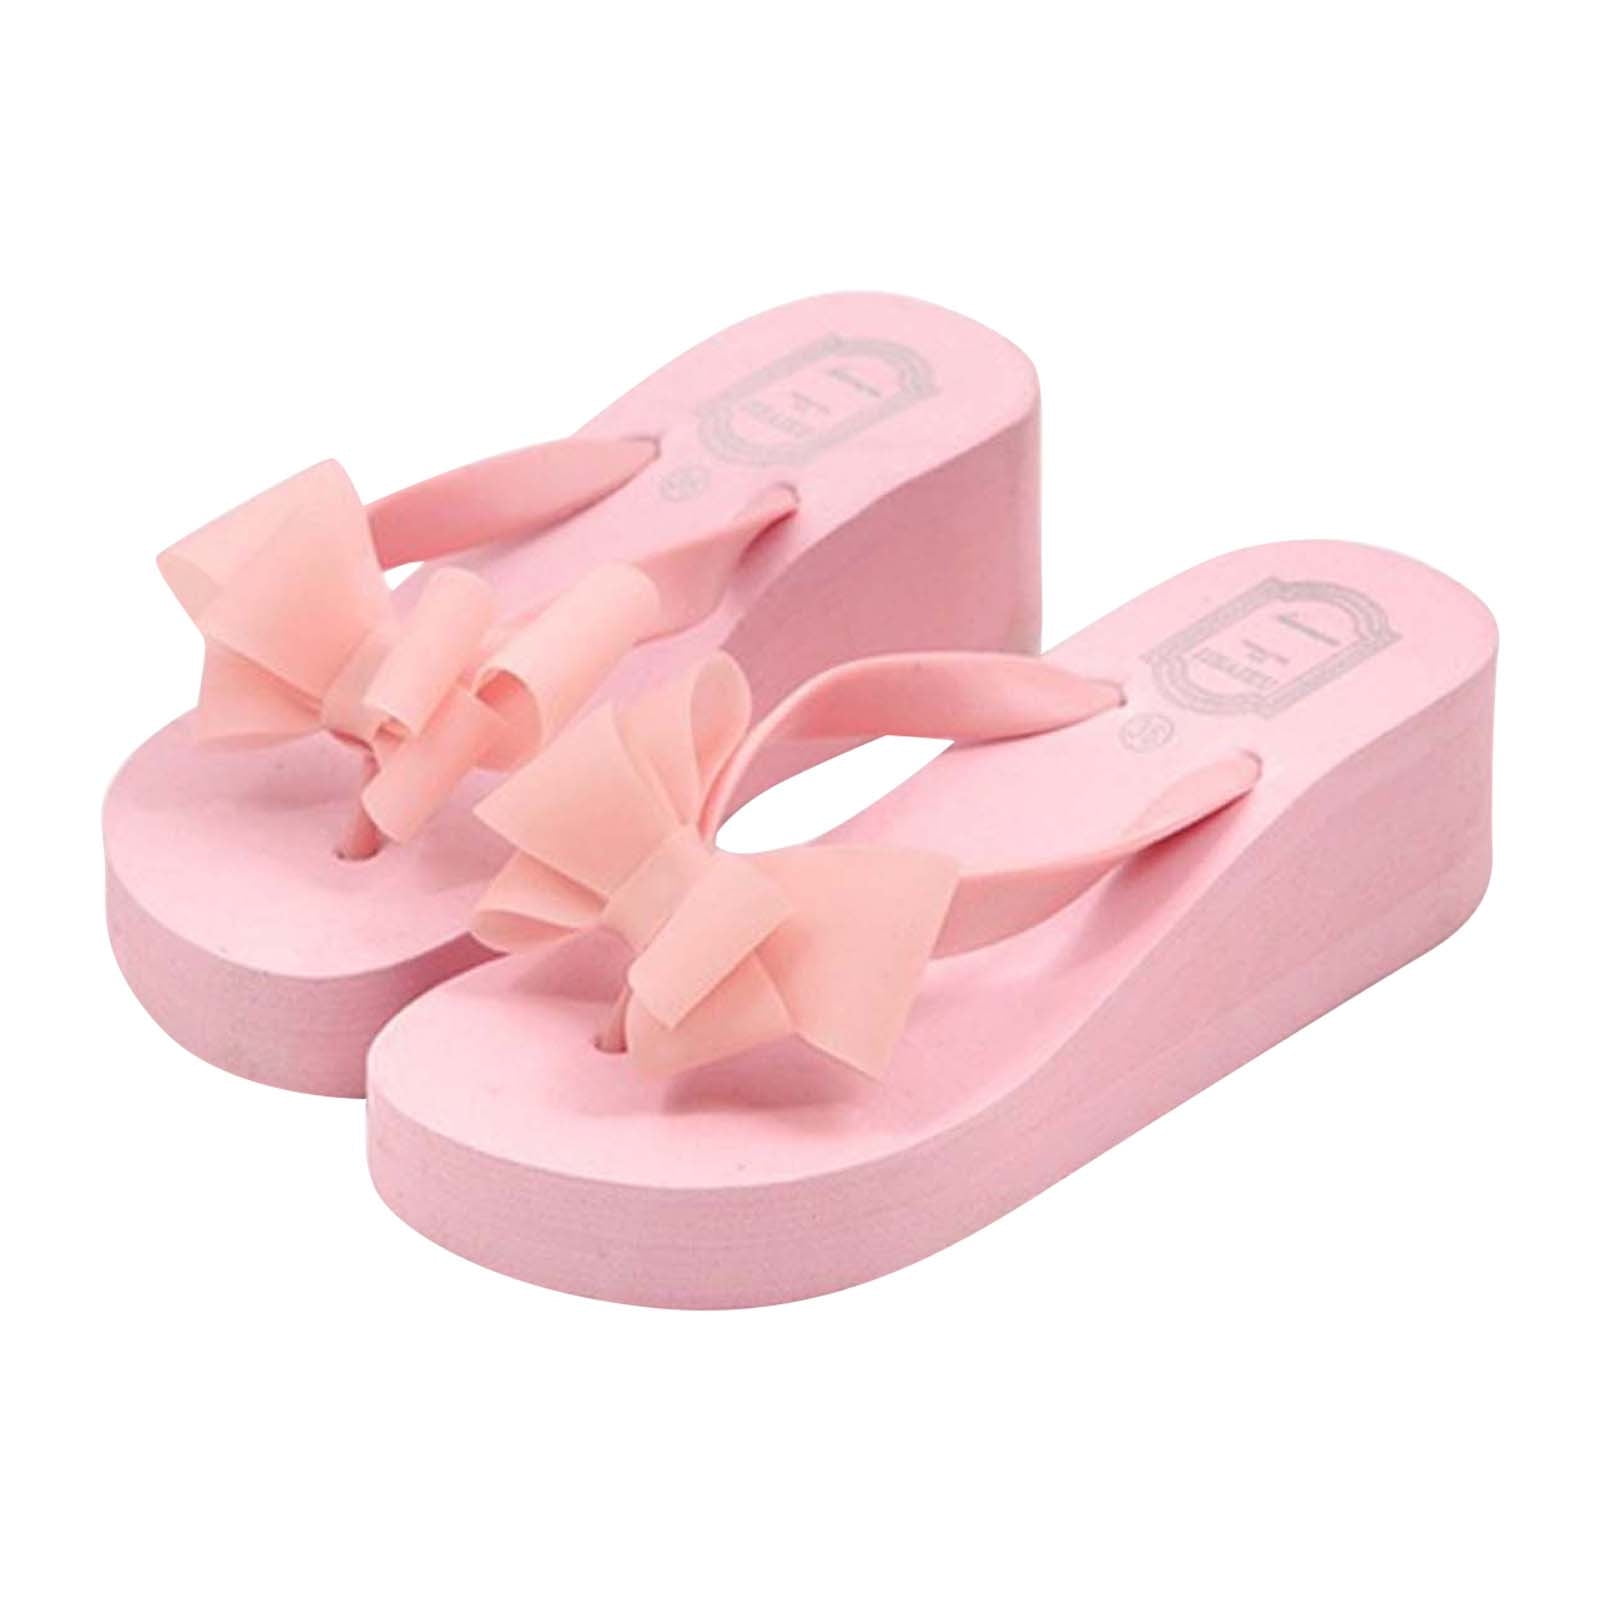 NWT - Olukai Women's Kapehe Flip Flops In Rosette Pink Sandals Shoes - Size  9